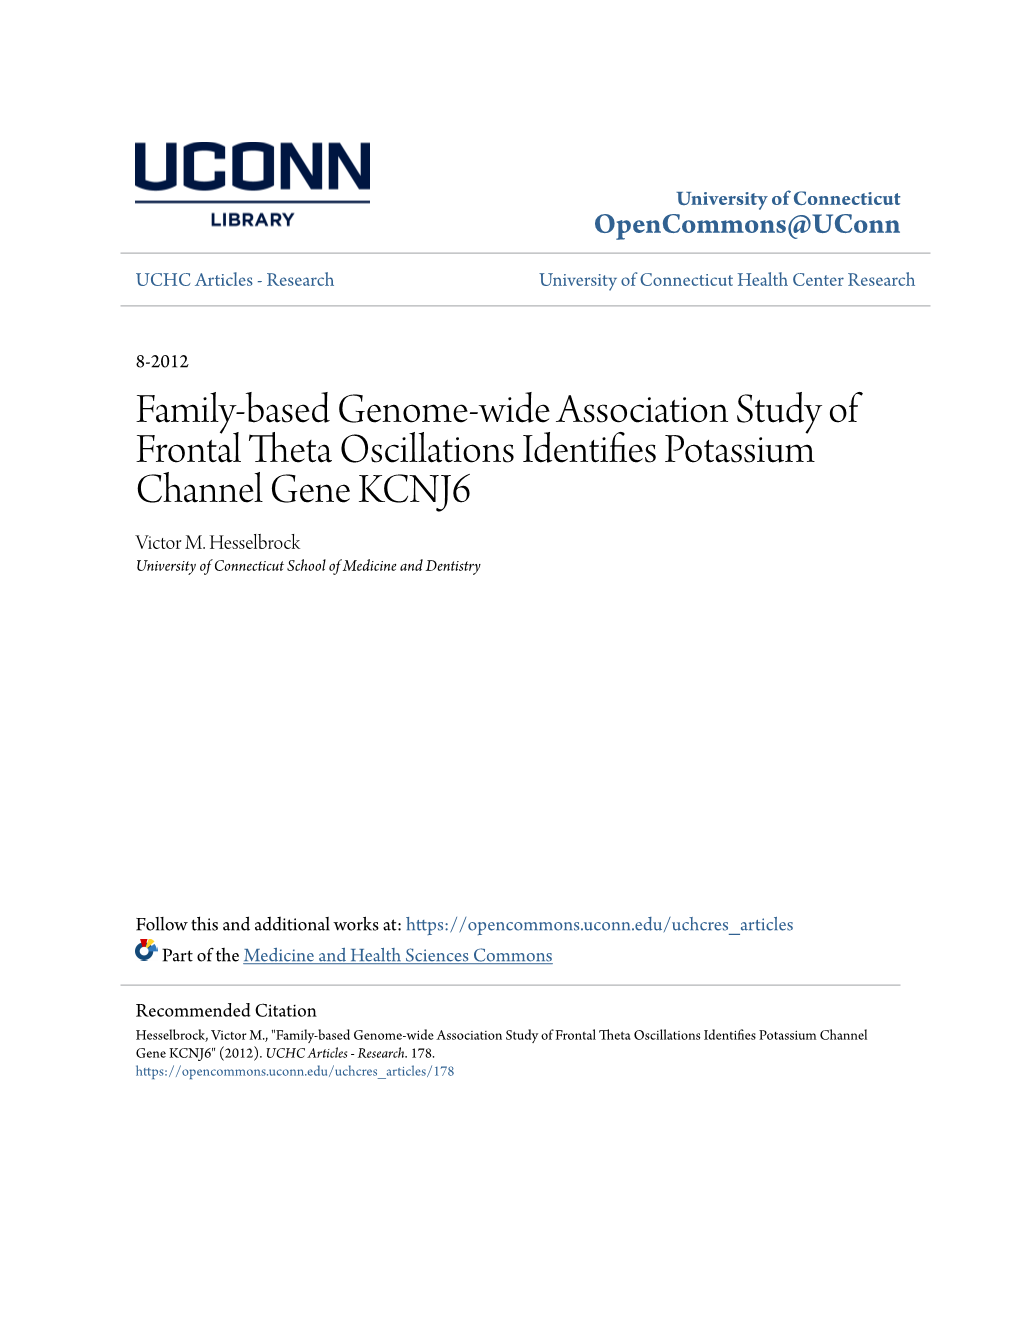 Family-Based Genome-Wide Association Study of Frontal Theta Oscillations Identifies Potassium Channel Gene KCNJ6" (2012)